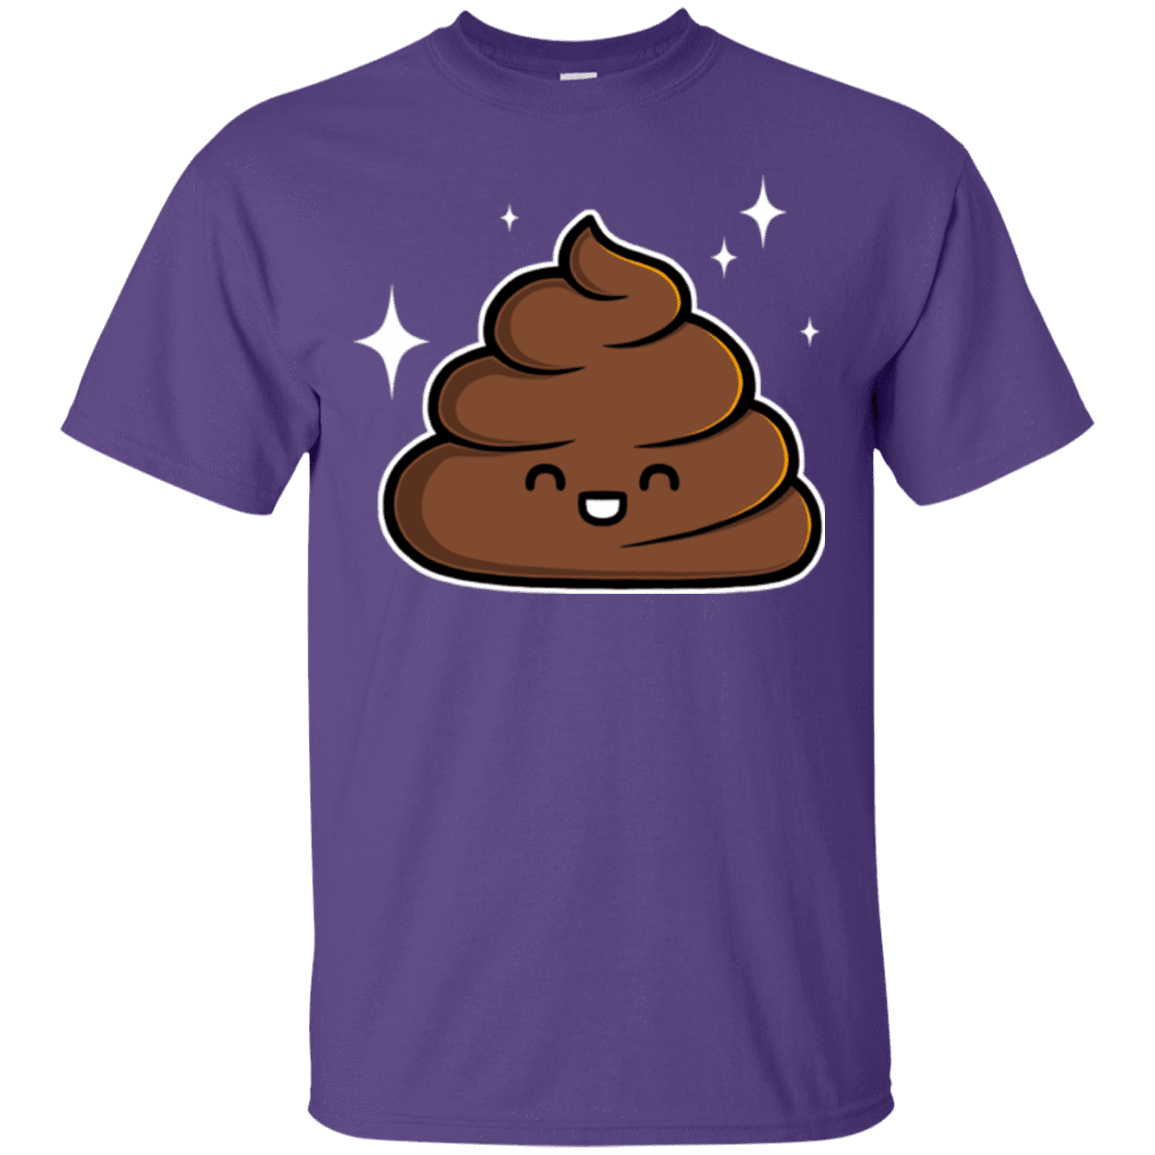 T-Shirts Purple / Small Cutie Poop T-Shirt